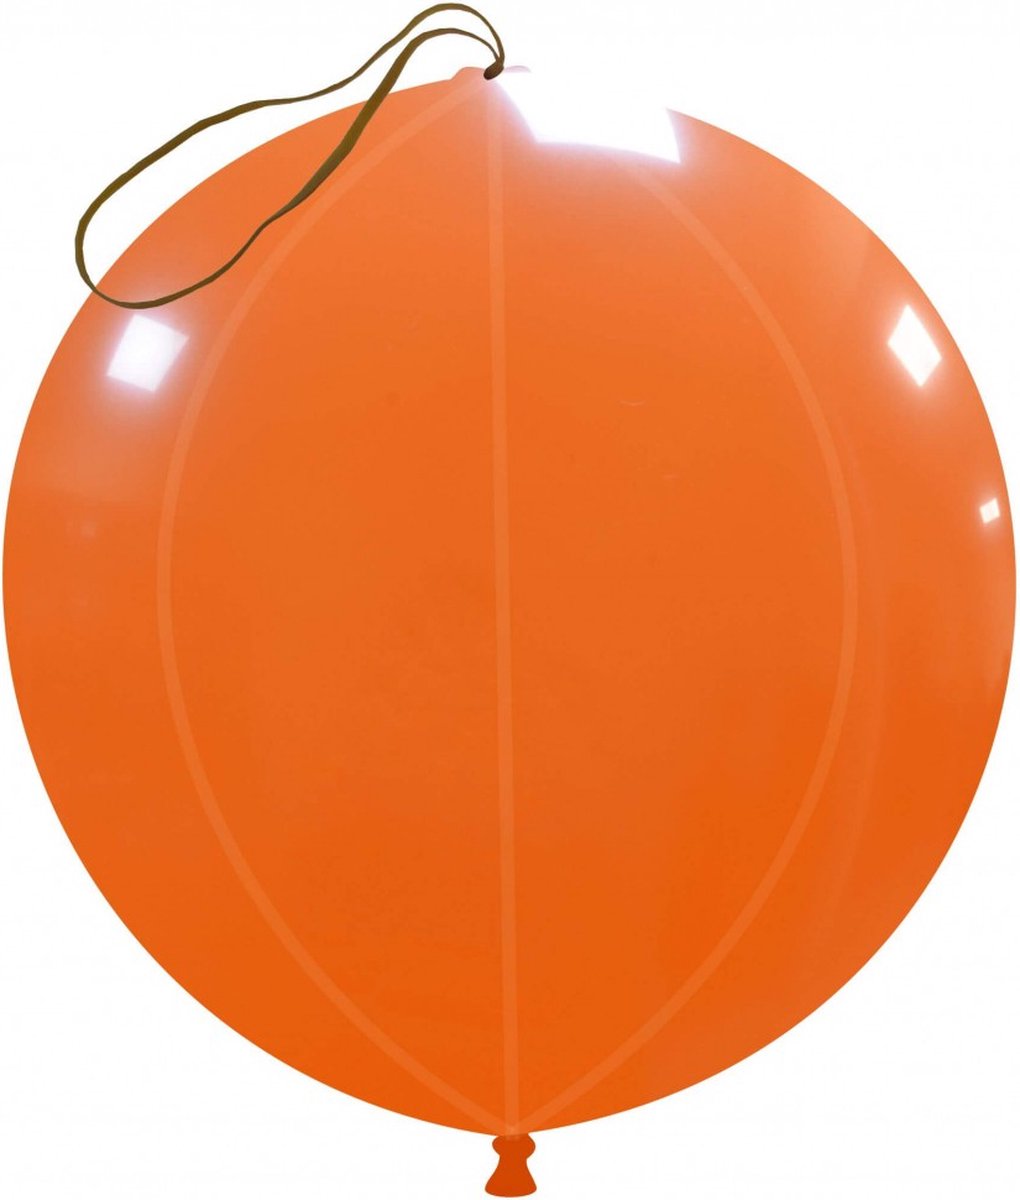 Punch ballonnen - oranje - Cattex - Boksballonnen - met elastiek - 50 stuks